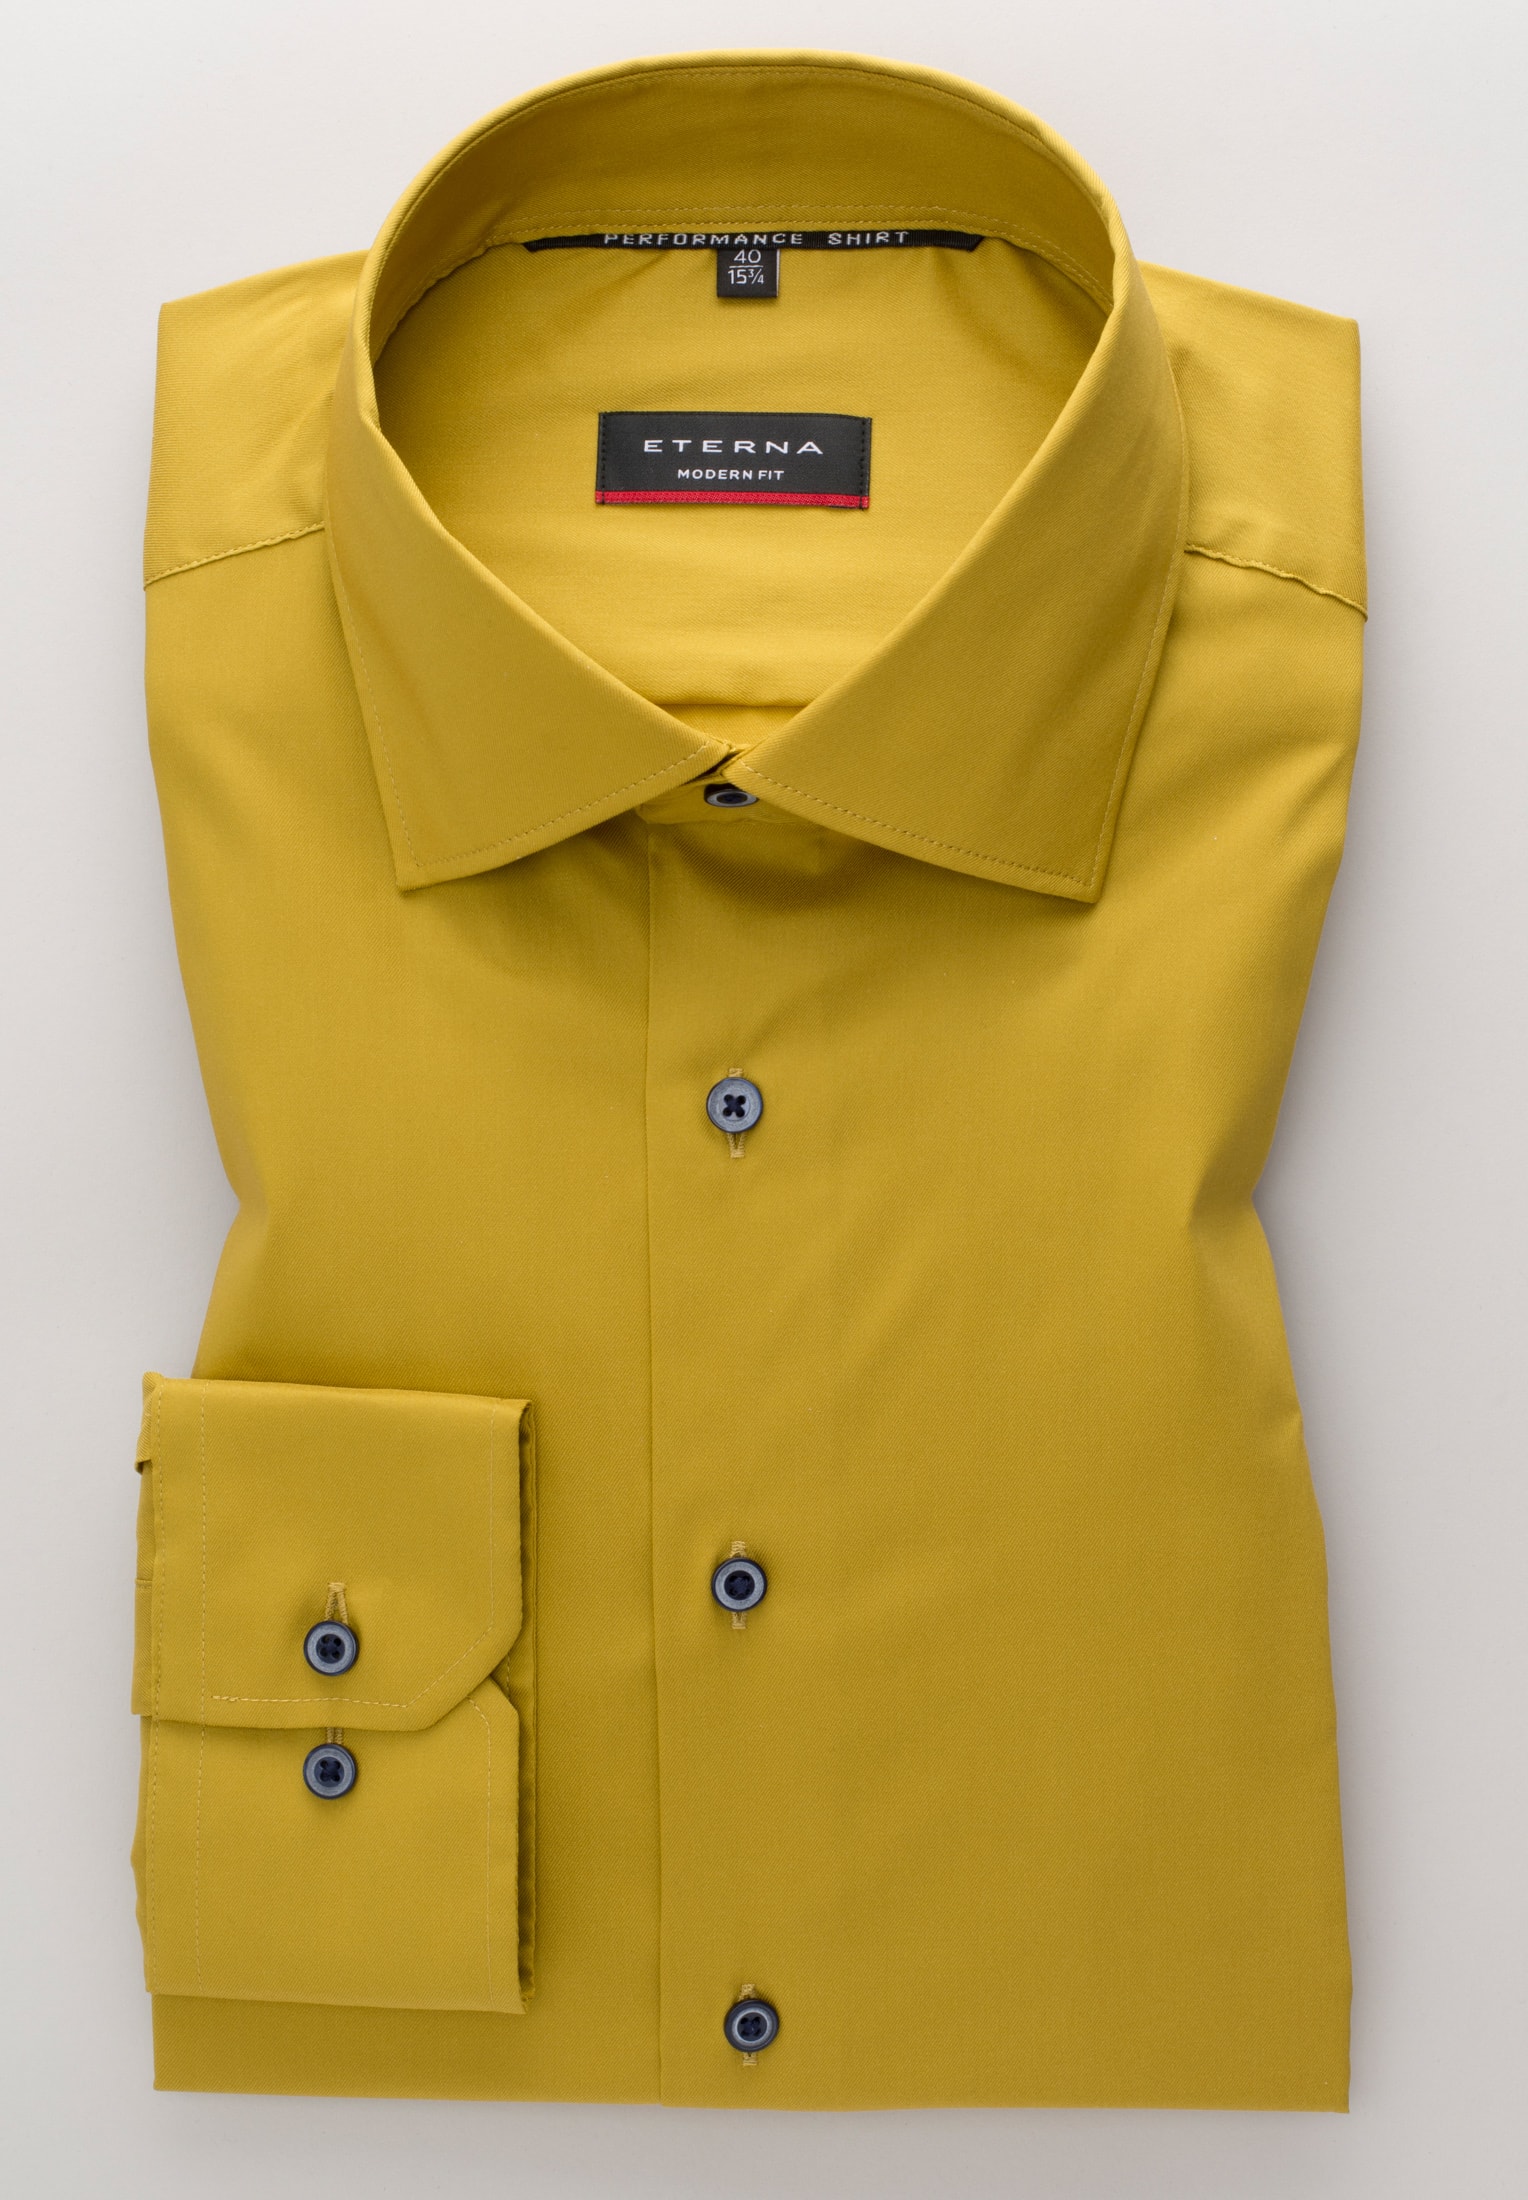 40 unifarben MODERN Shirt FIT gelb | Performance | in | | 1SH02224-07-01-40-1/1 gelb Langarm